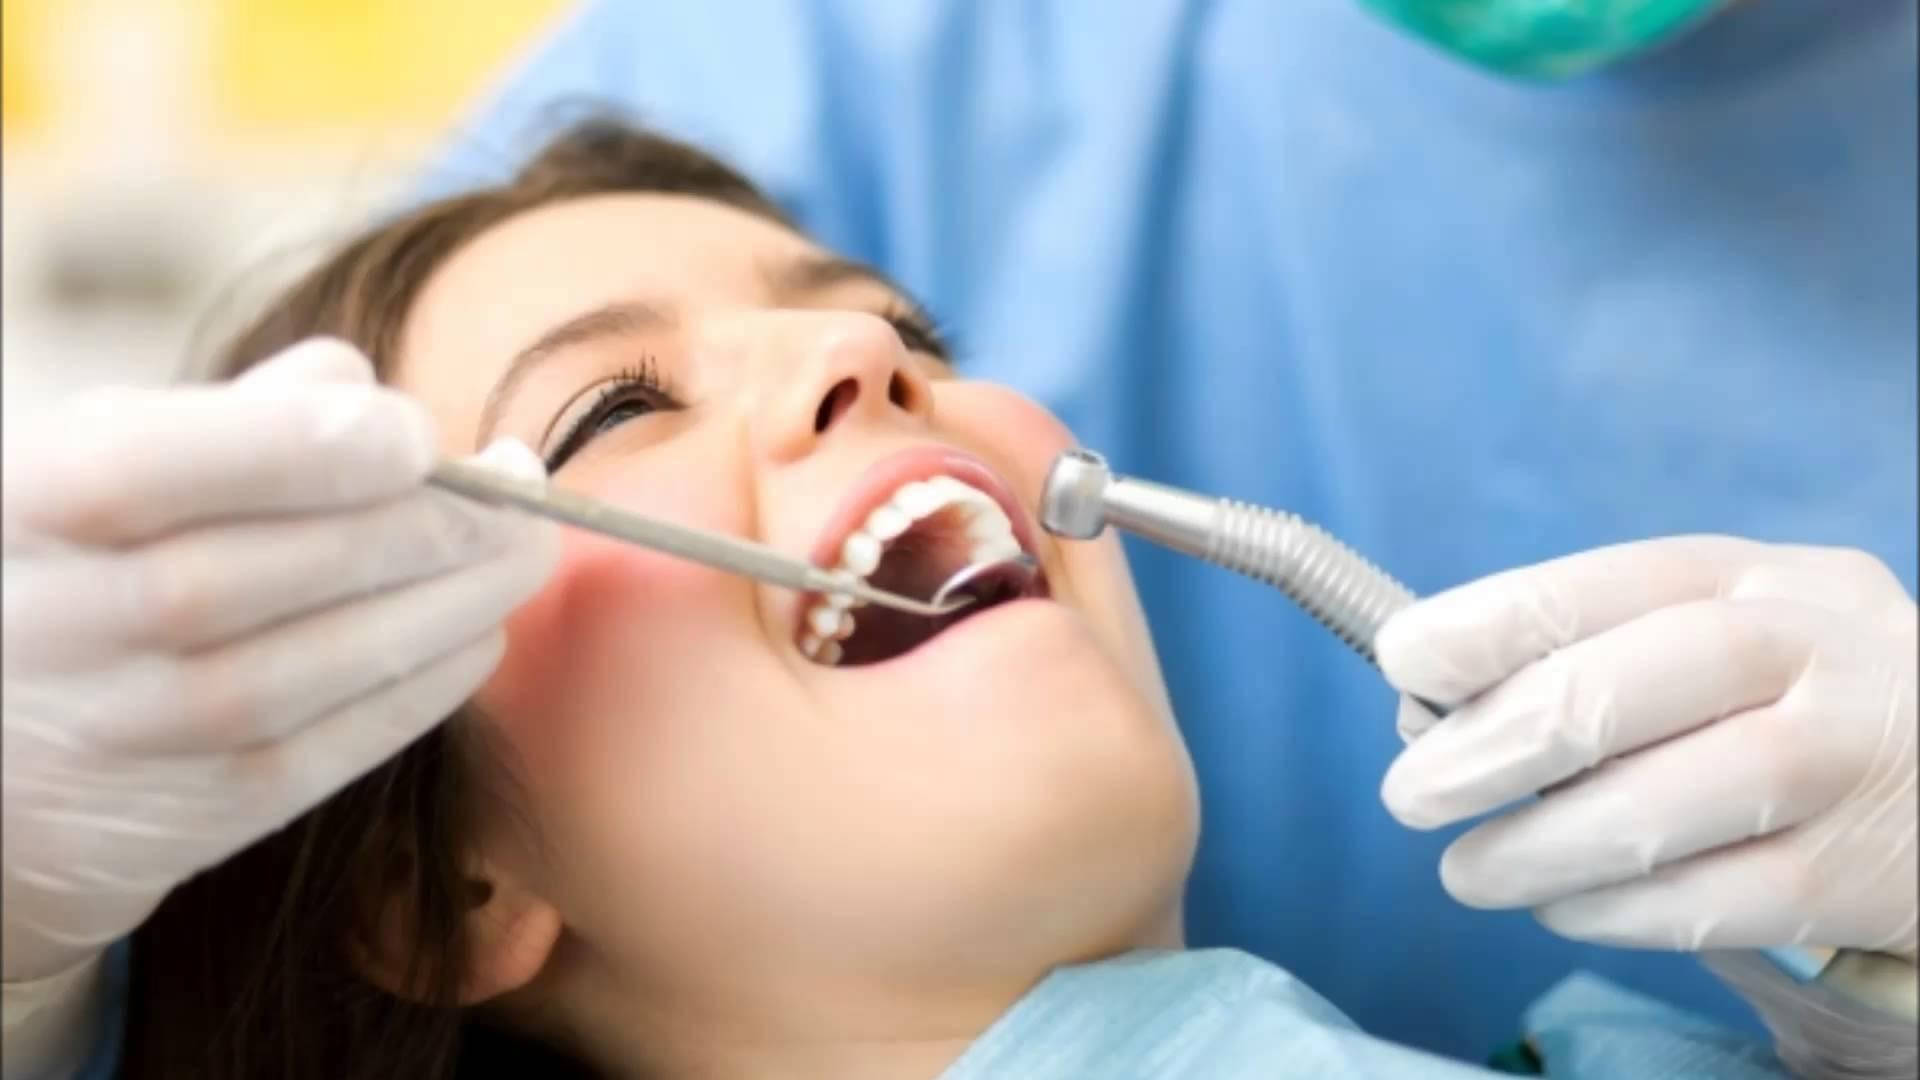 Tandläkarenspatient Ler Under En Behandling På En Datorskärm Eller Mobilt Bakgrundsbild. Wallpaper